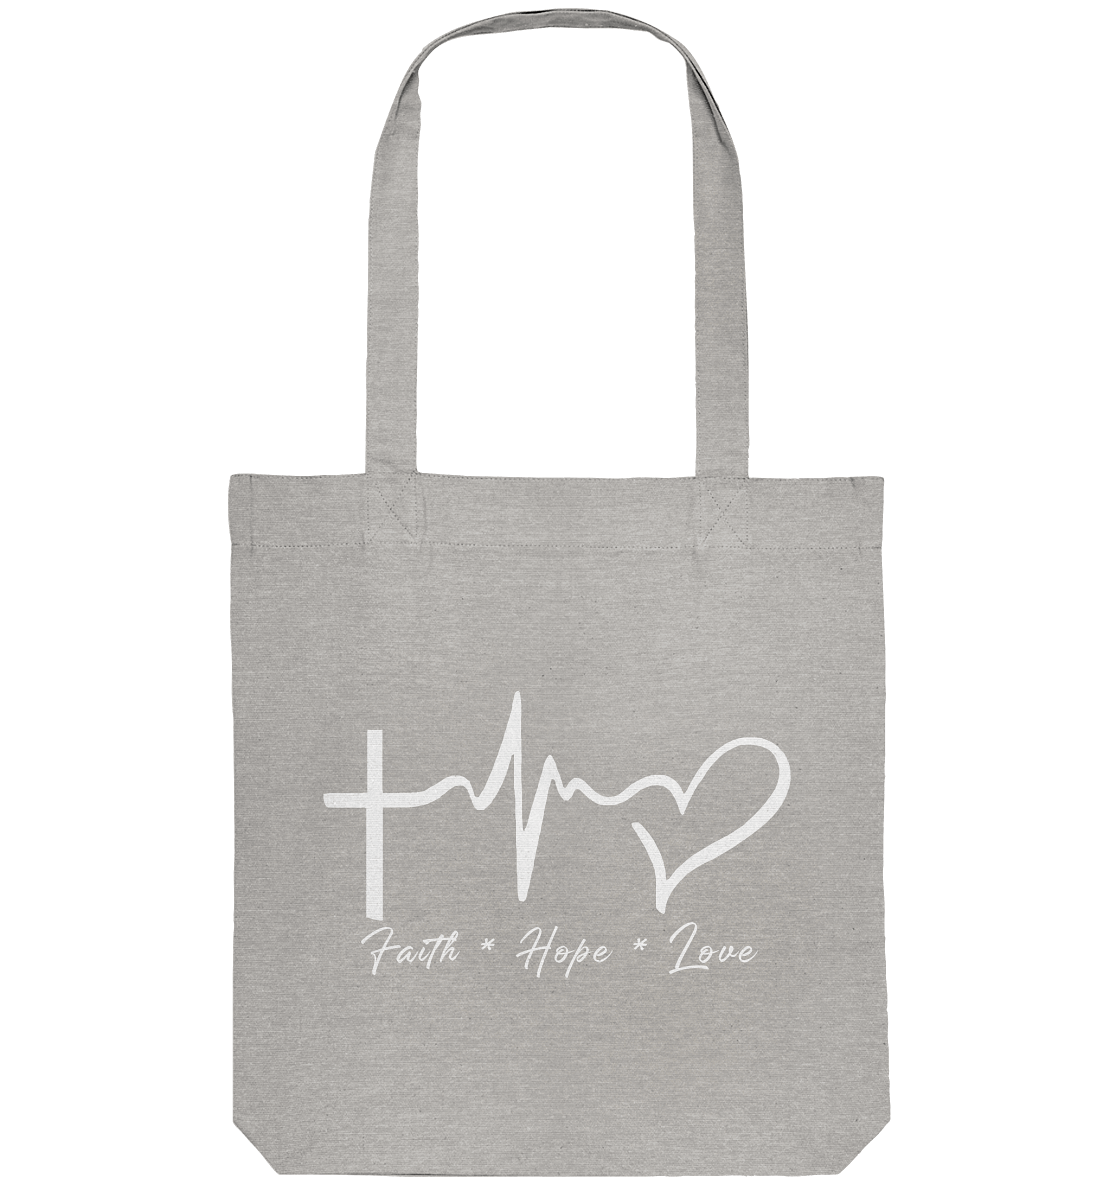 Faith * Hope * Love - Organic Tote-Bag